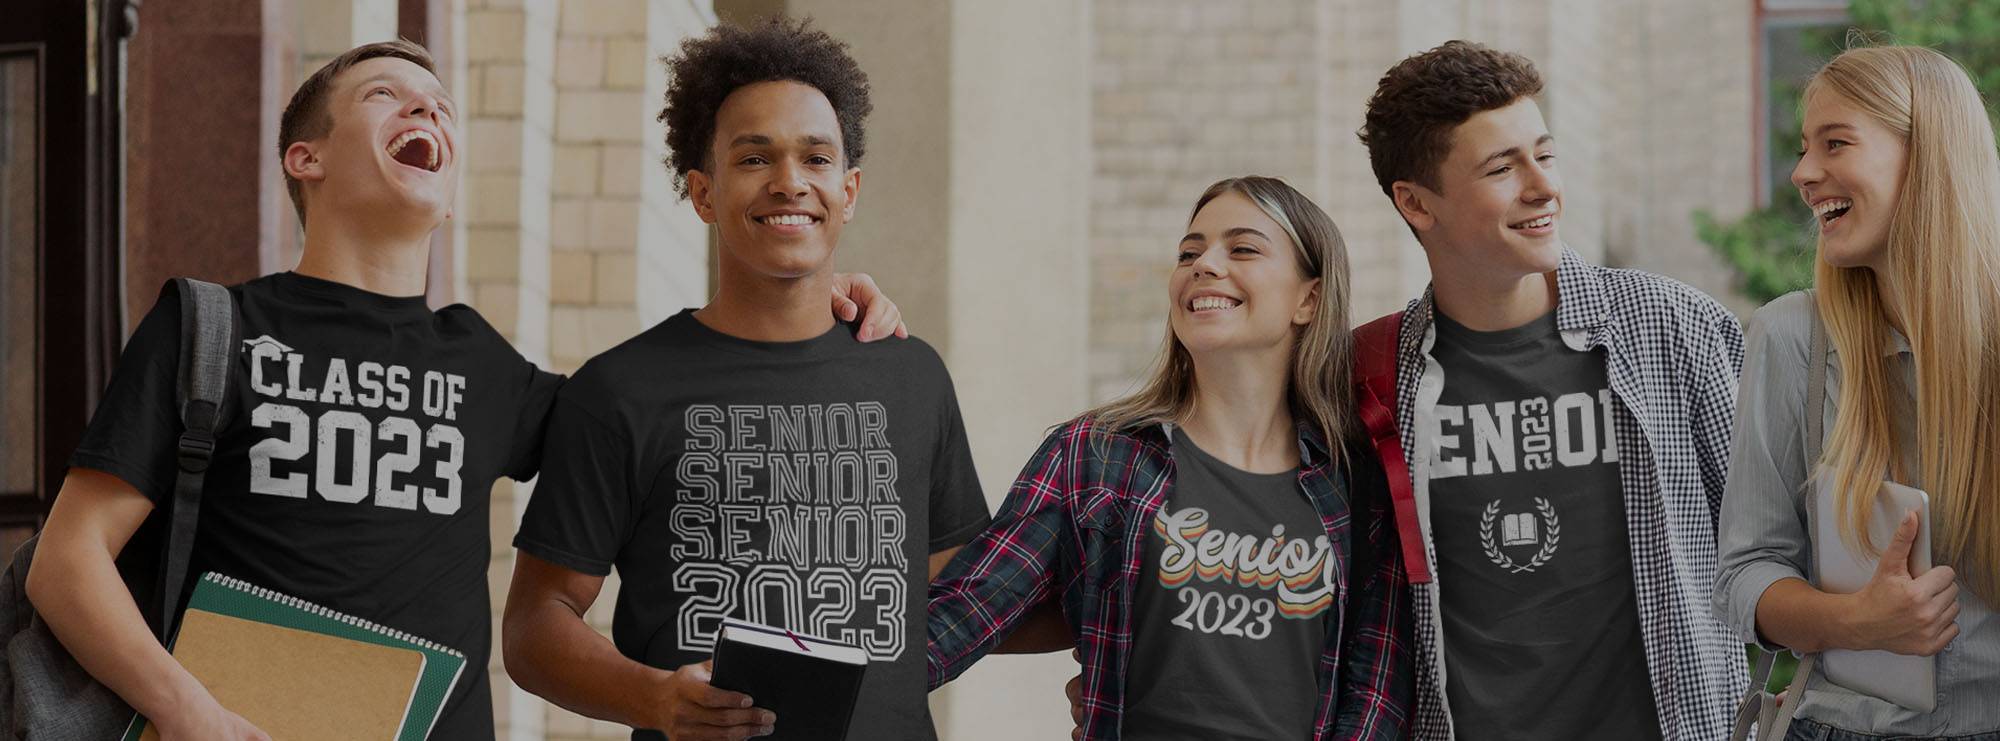 TreOri Academic - T-Shirts & Merch for Graduates